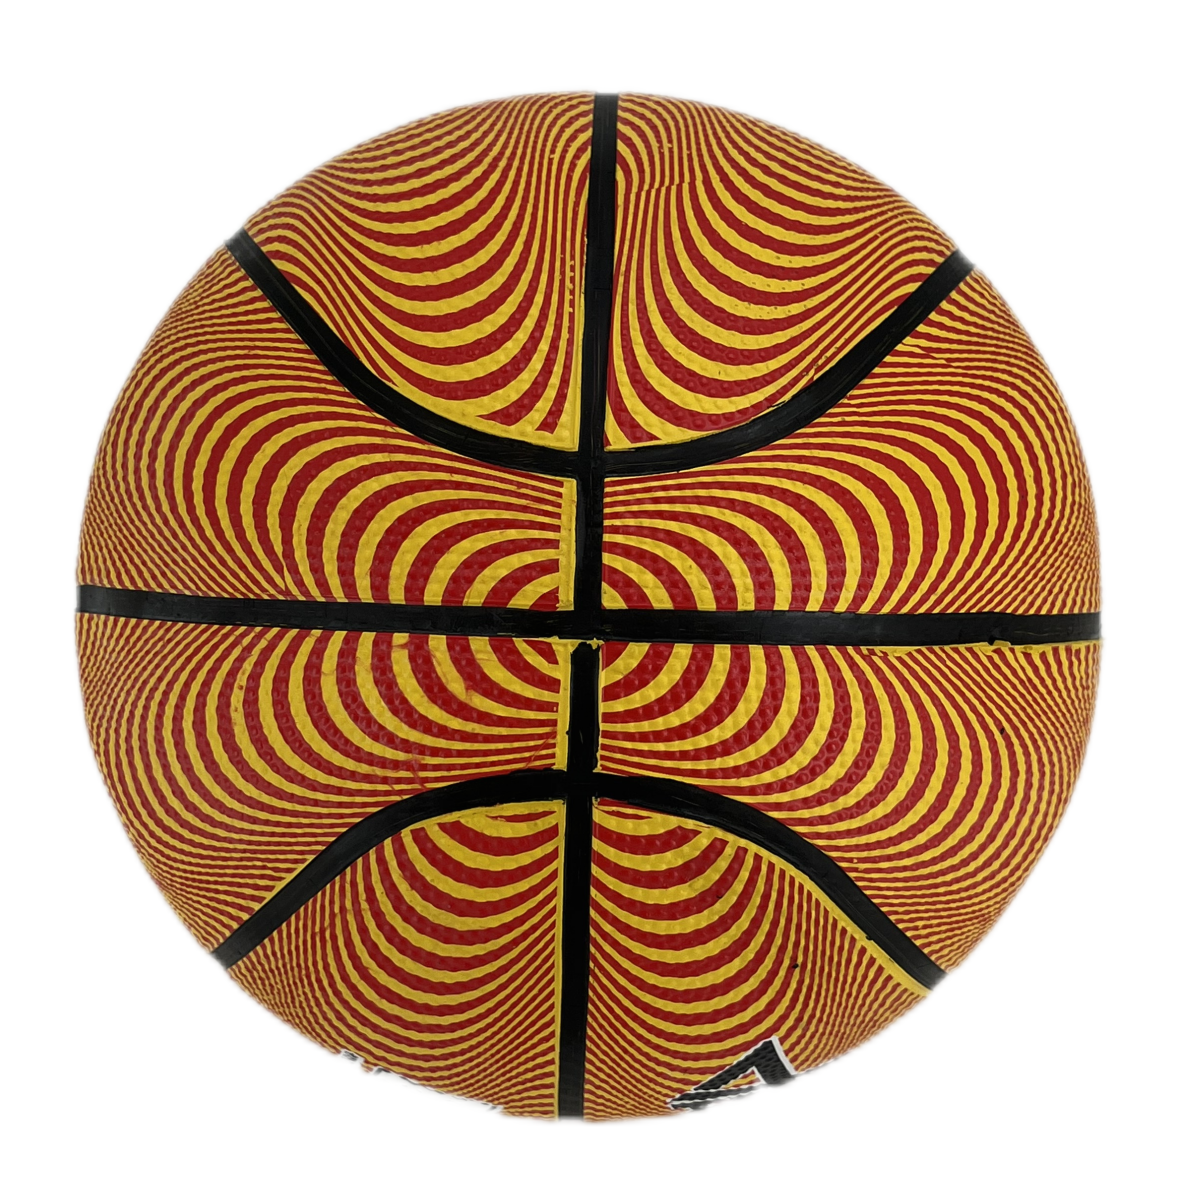 Custom Brand Basketball 